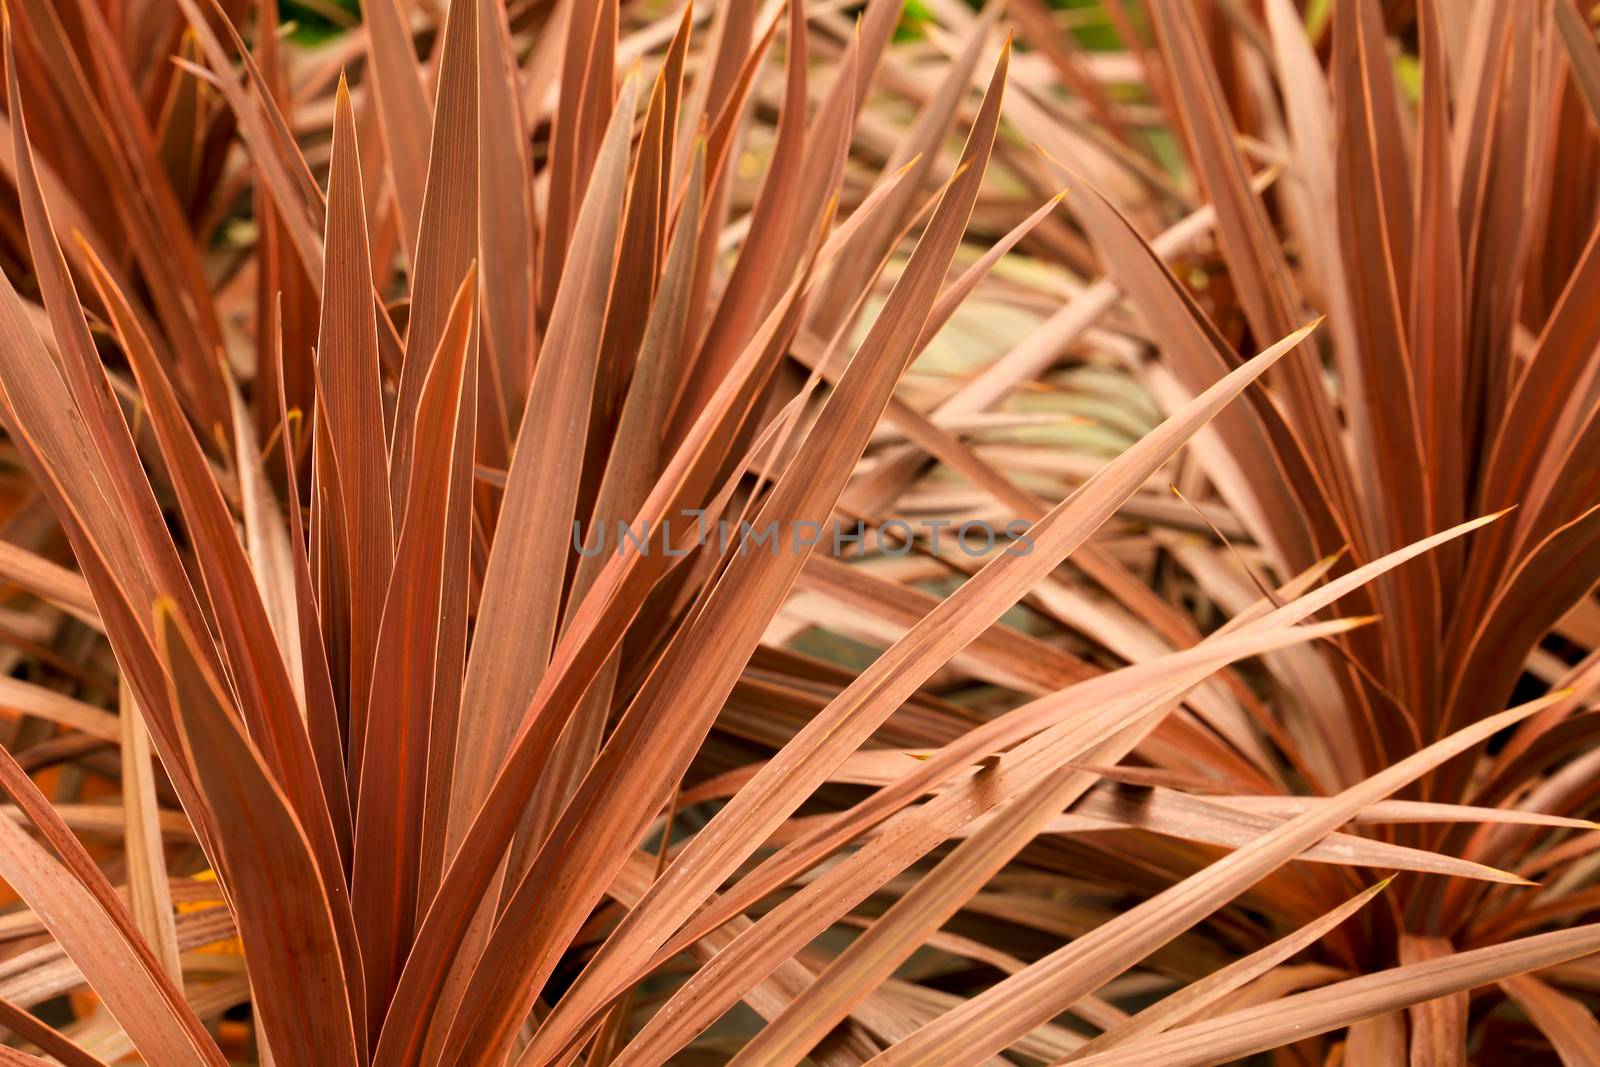 Cordyline Australis plant in the garden by soniabonet